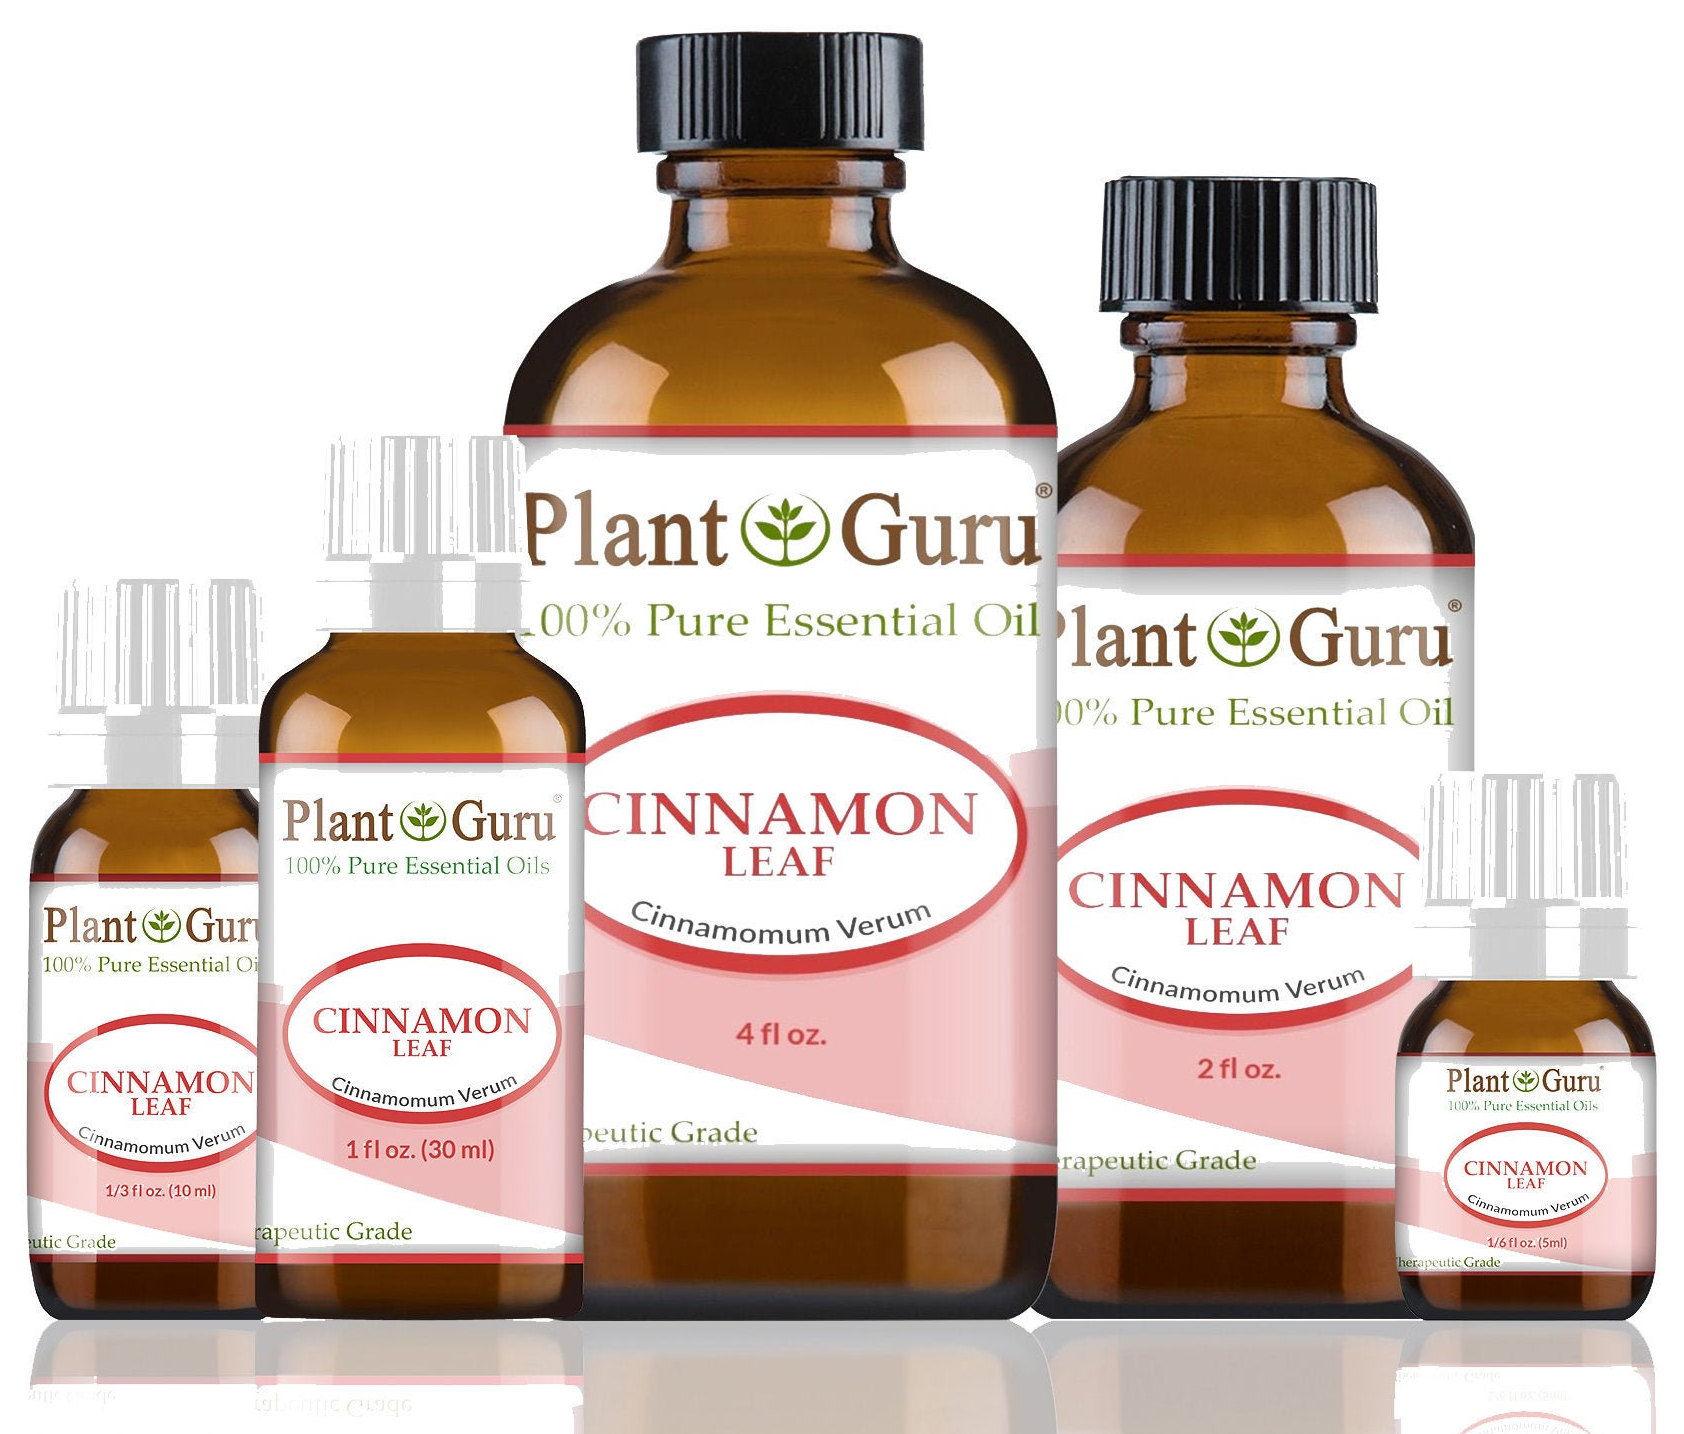 100% Pure Cinnamon Essential Oil - Premium Cinnamon Oil for Aromatherapy,  Massage, Topical & Household Uses - 1 fl oz (Cinnamon)